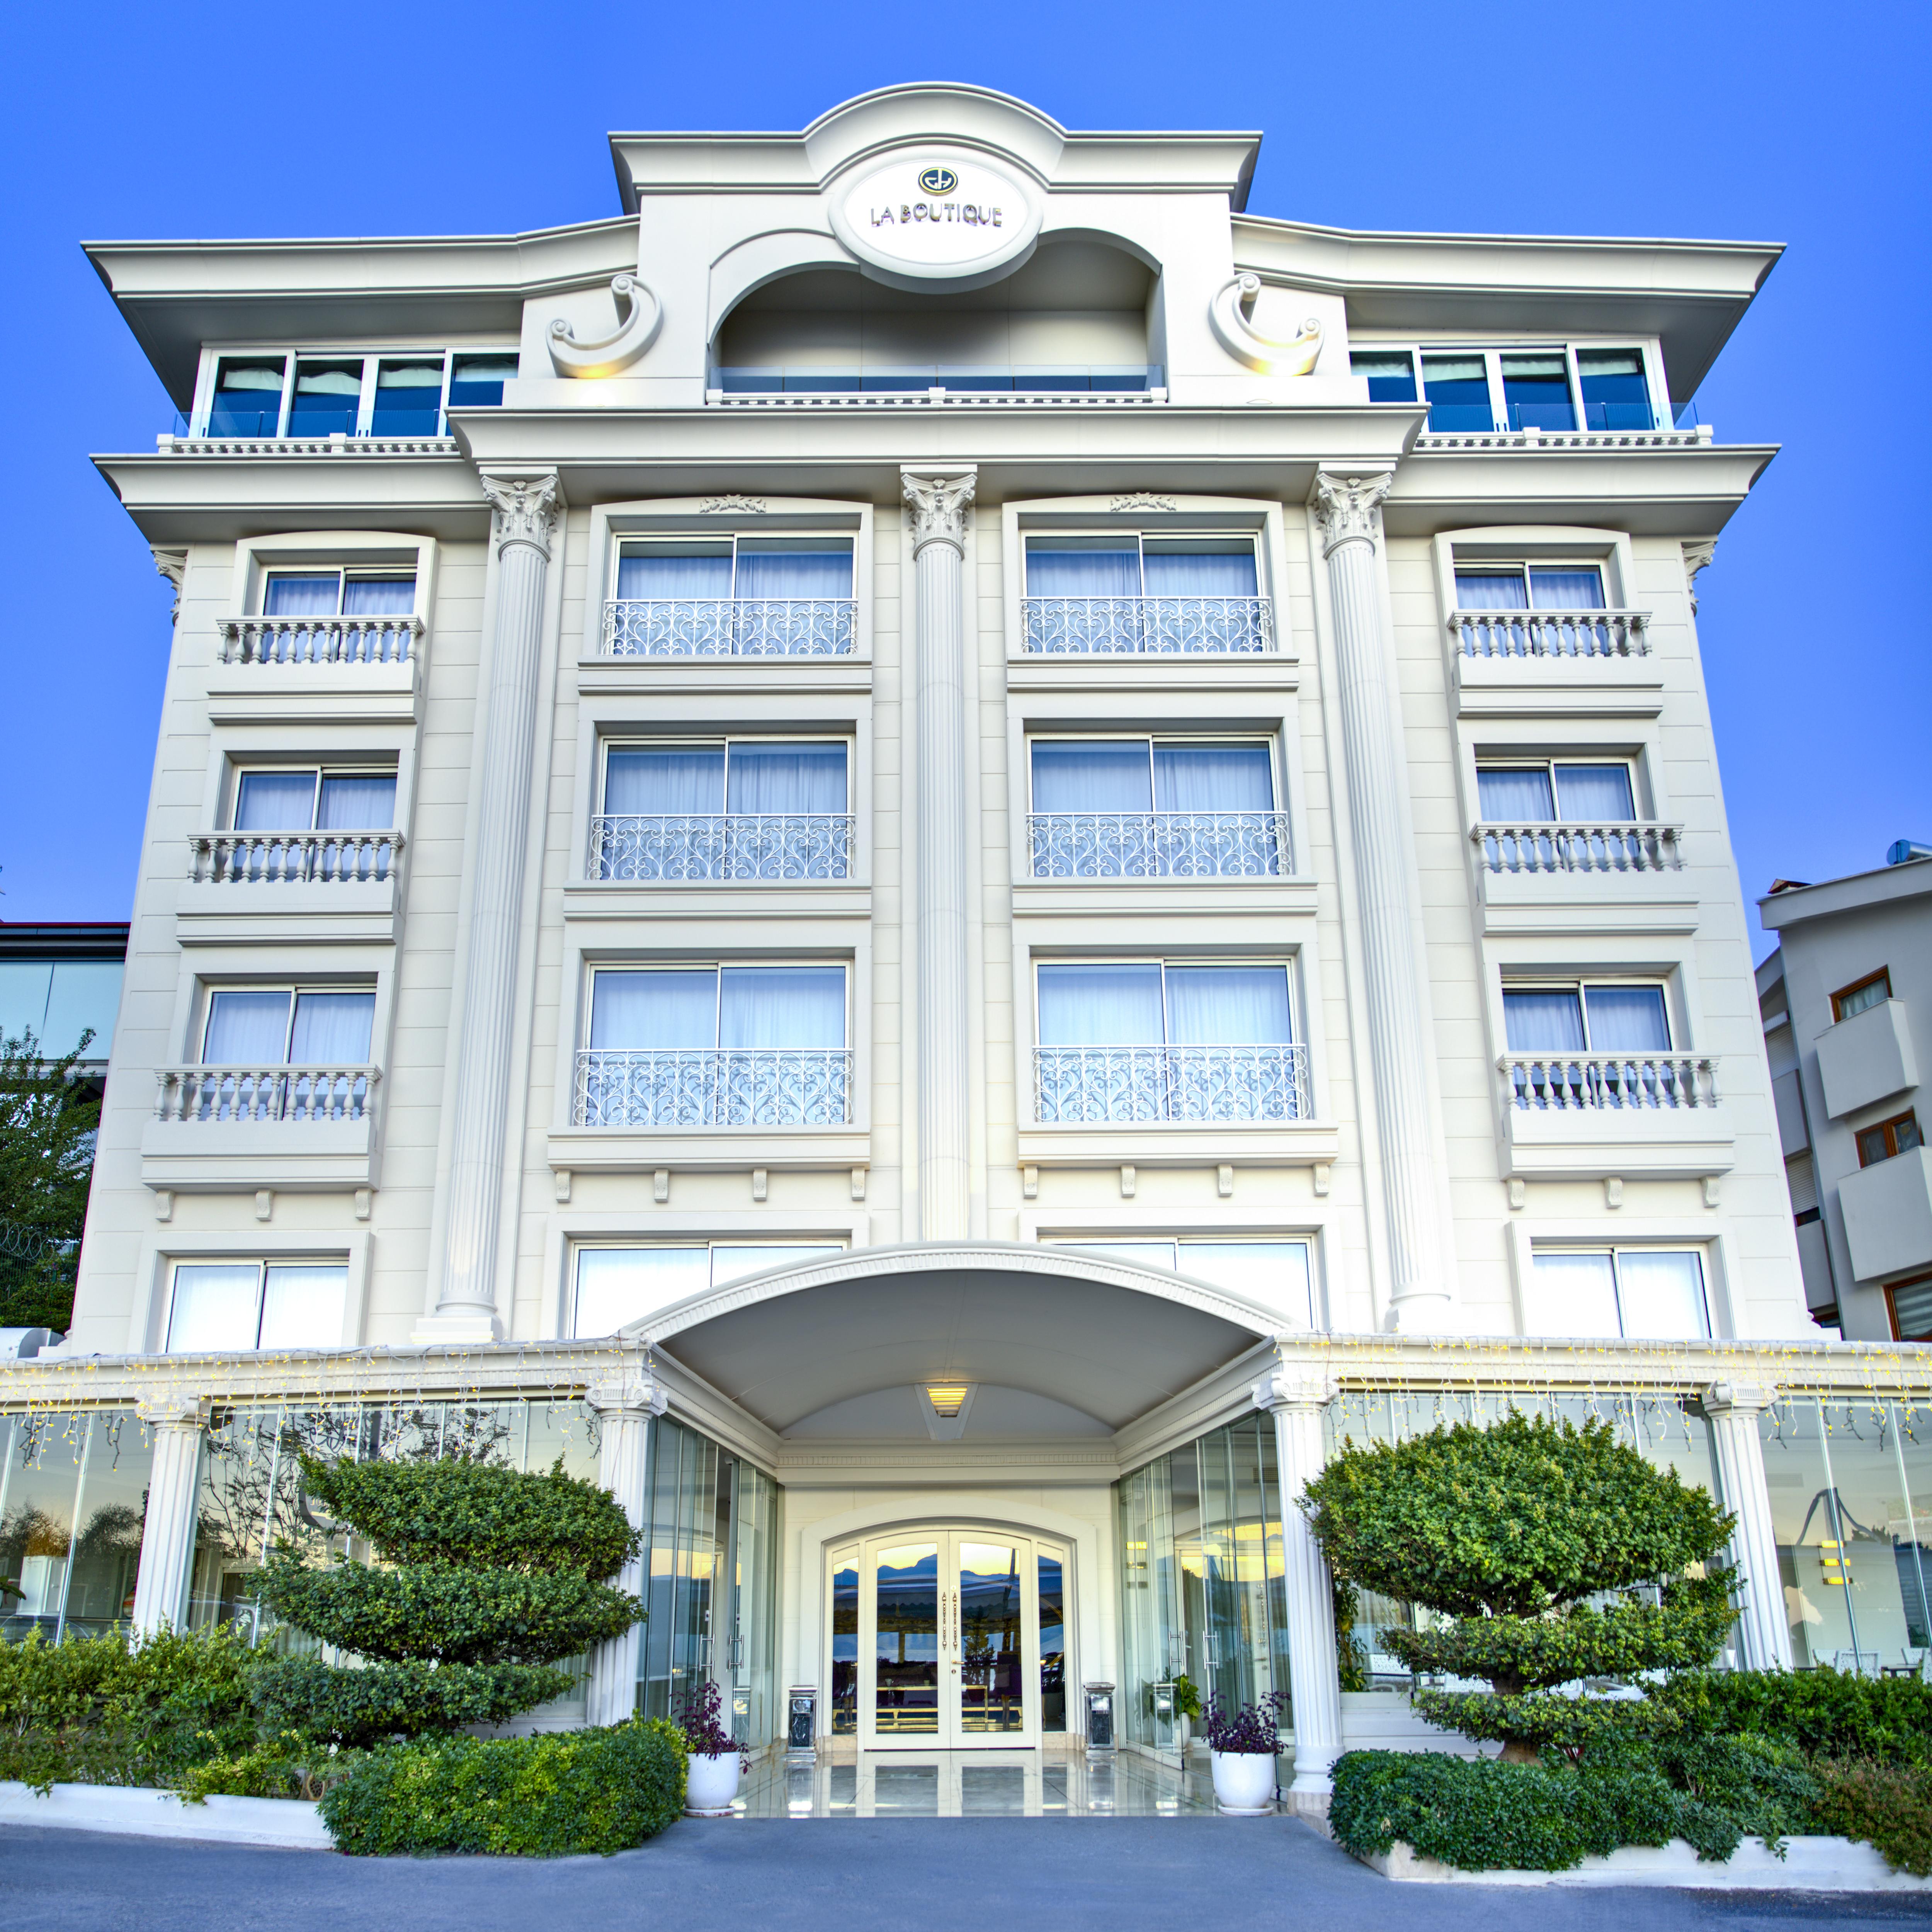 Le boutique. Анталия Hotel Boutique. Отель «Boutique Hotel Donauwalzer» 4*. Бутик отель nun Antalya.